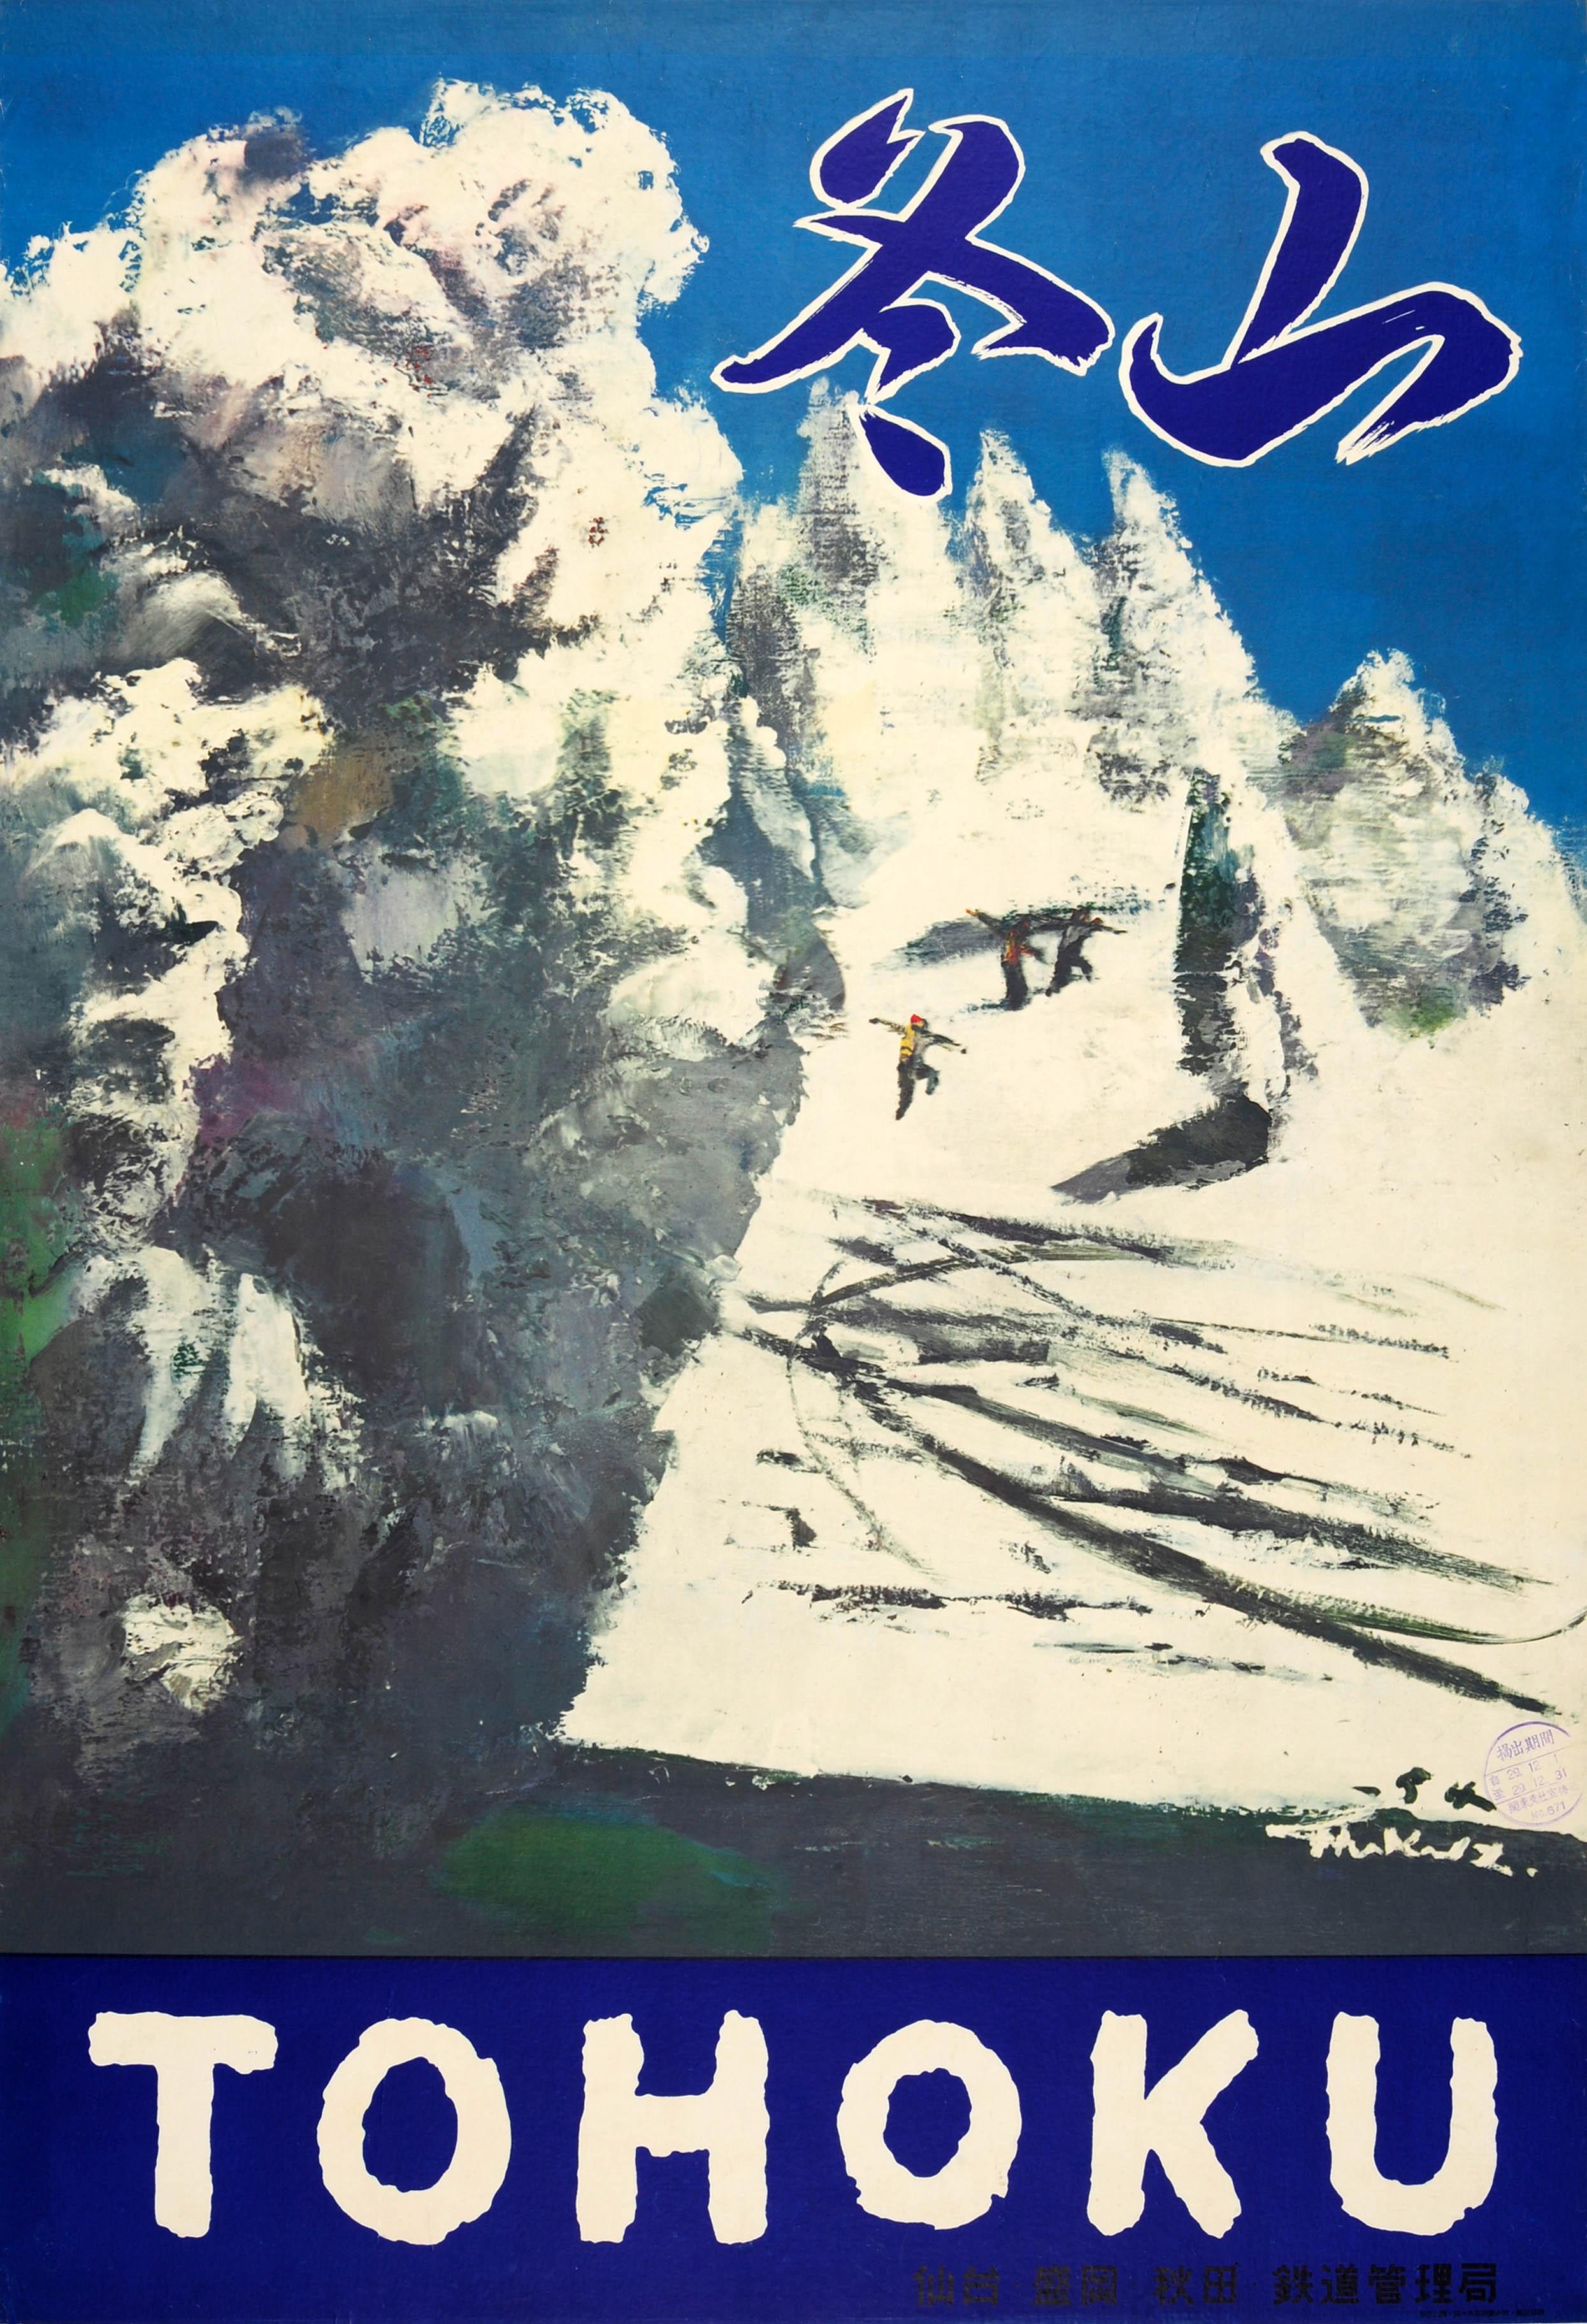 Unknown Print – Original Vintage Winter Sport And Skiing Poster For The Tohoku Ski Resort Japan